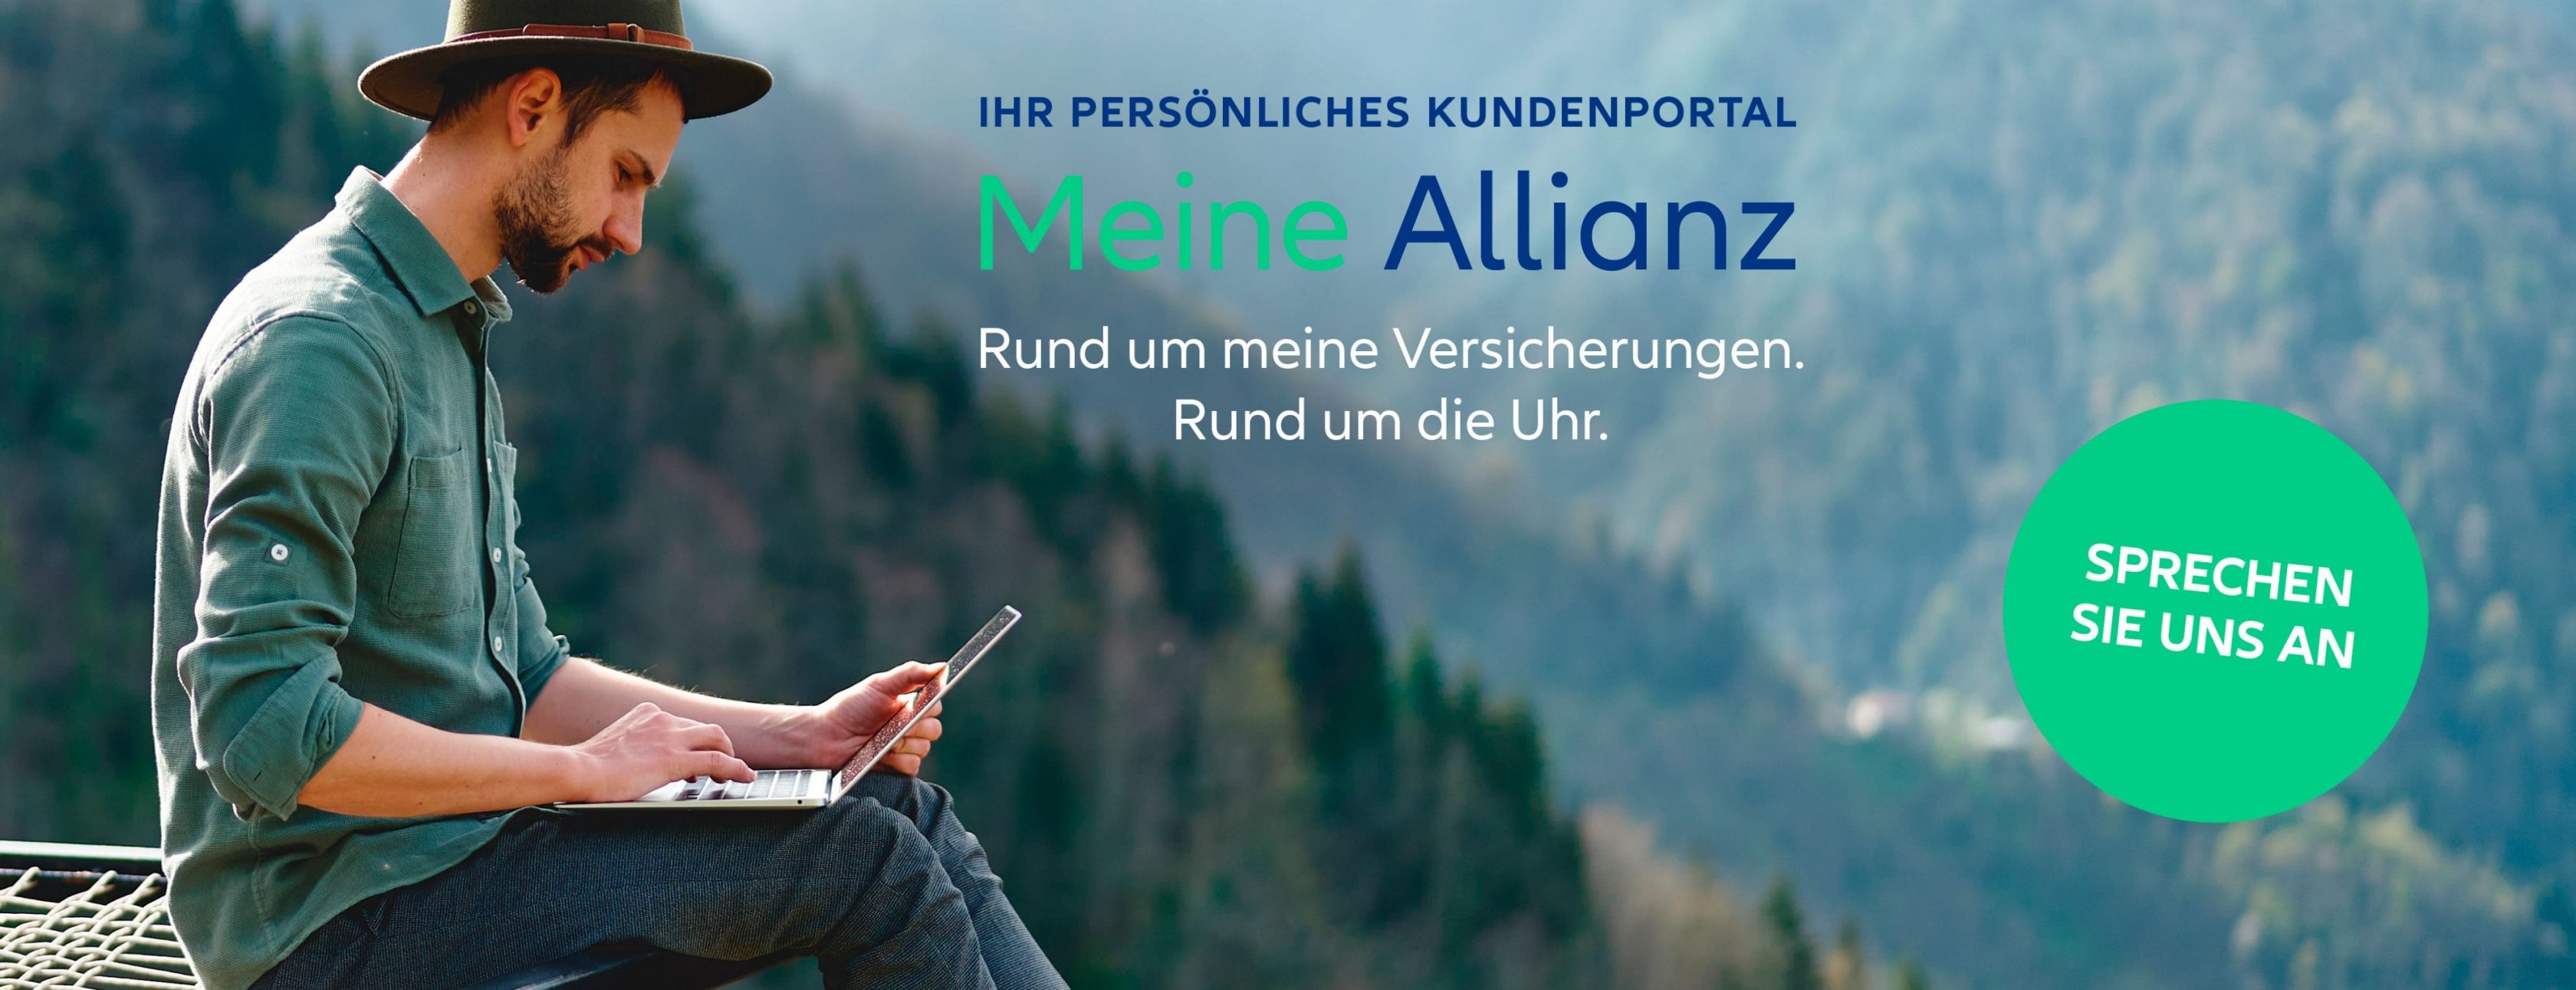 Allianz Versicherung Petra Lohse Dahme/Mark - Allianz Meine Allianz Petra Lohse